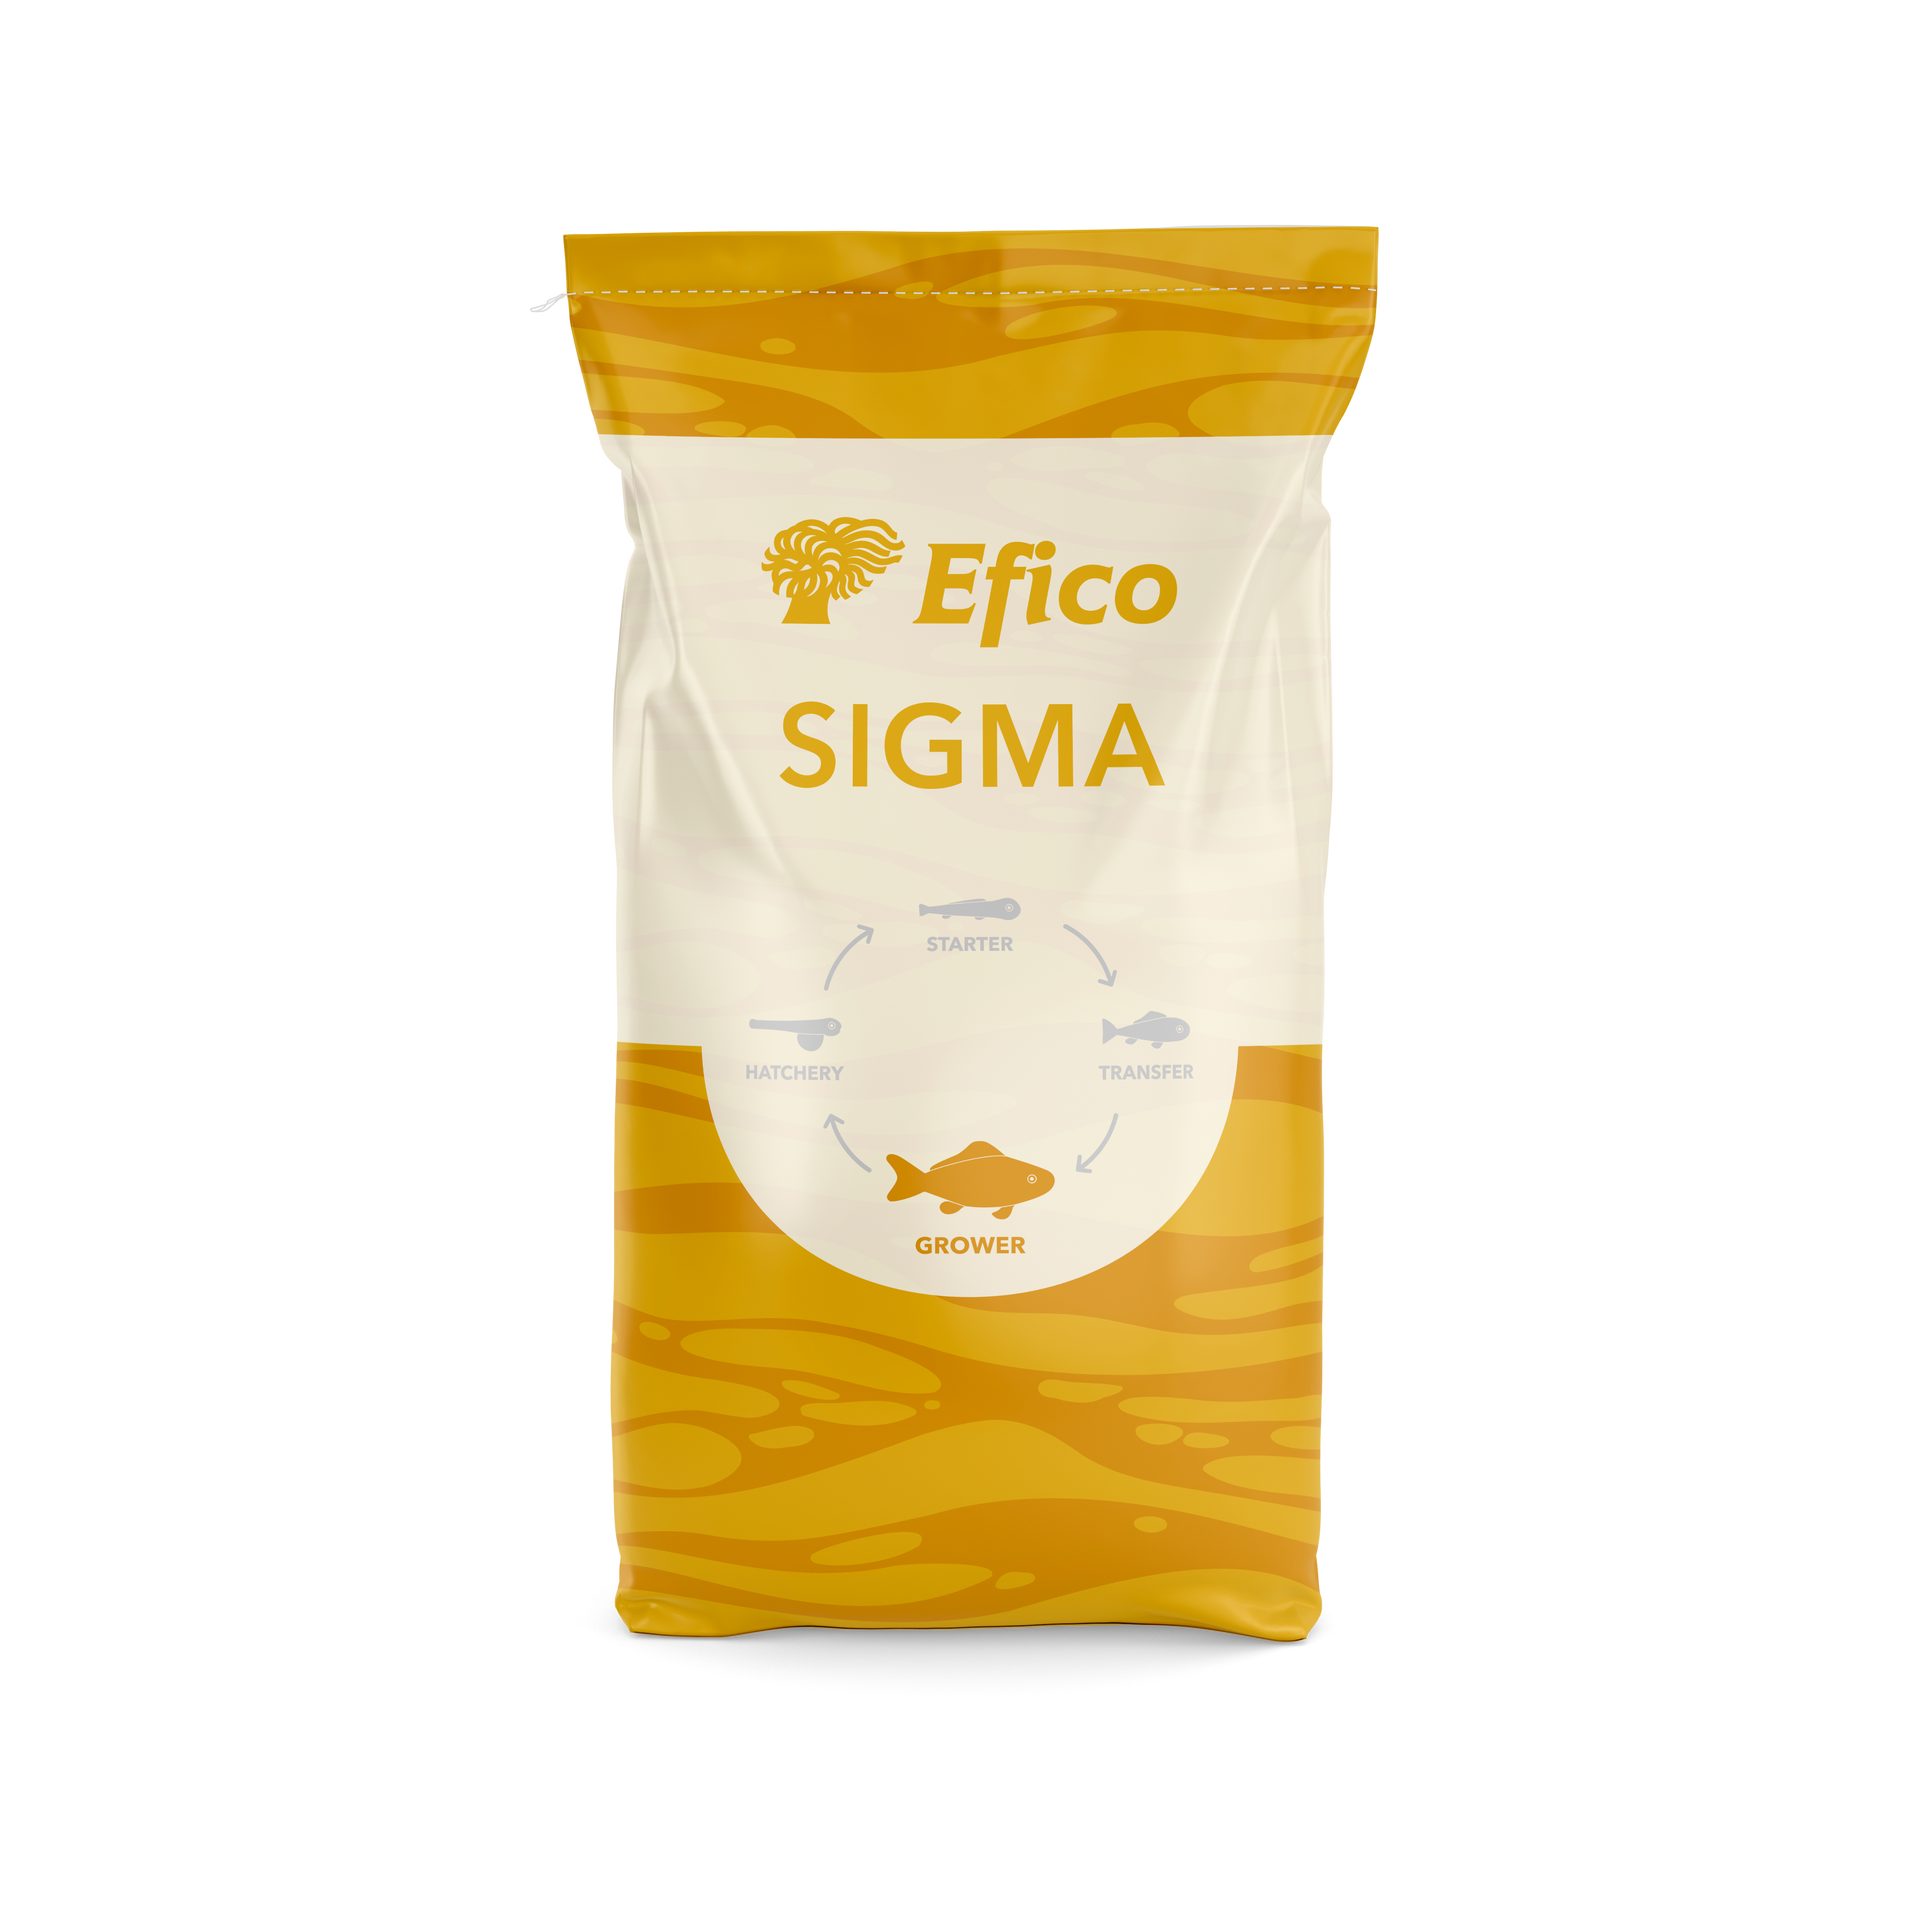 BioMar's Efico Sigma finisher feed for Sturgeon